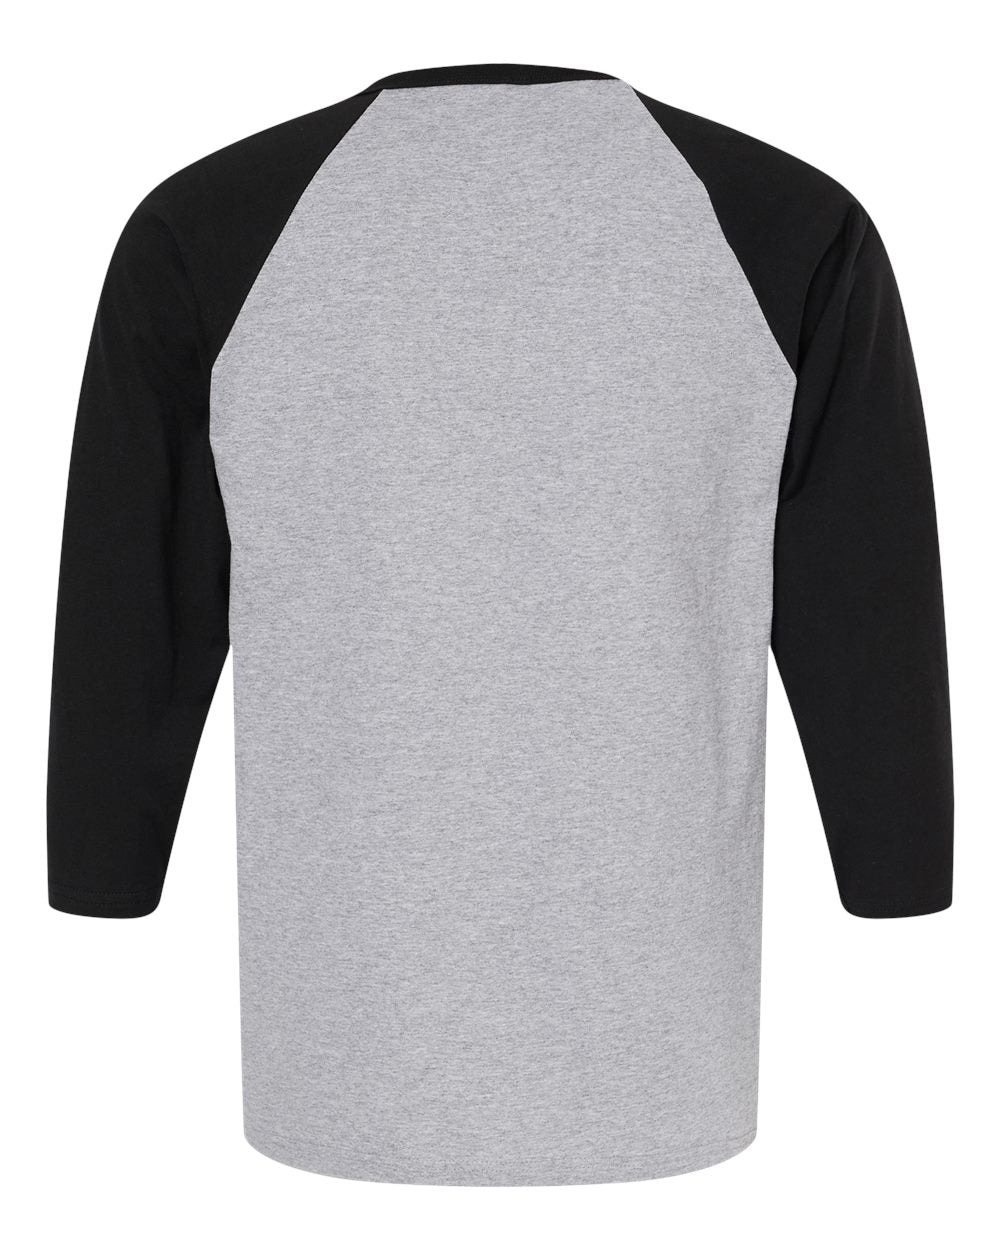 M&O Raglan Three-Quarter Sleeve Baseball T-Shirt 5540 #color_Sport Grey/ Black